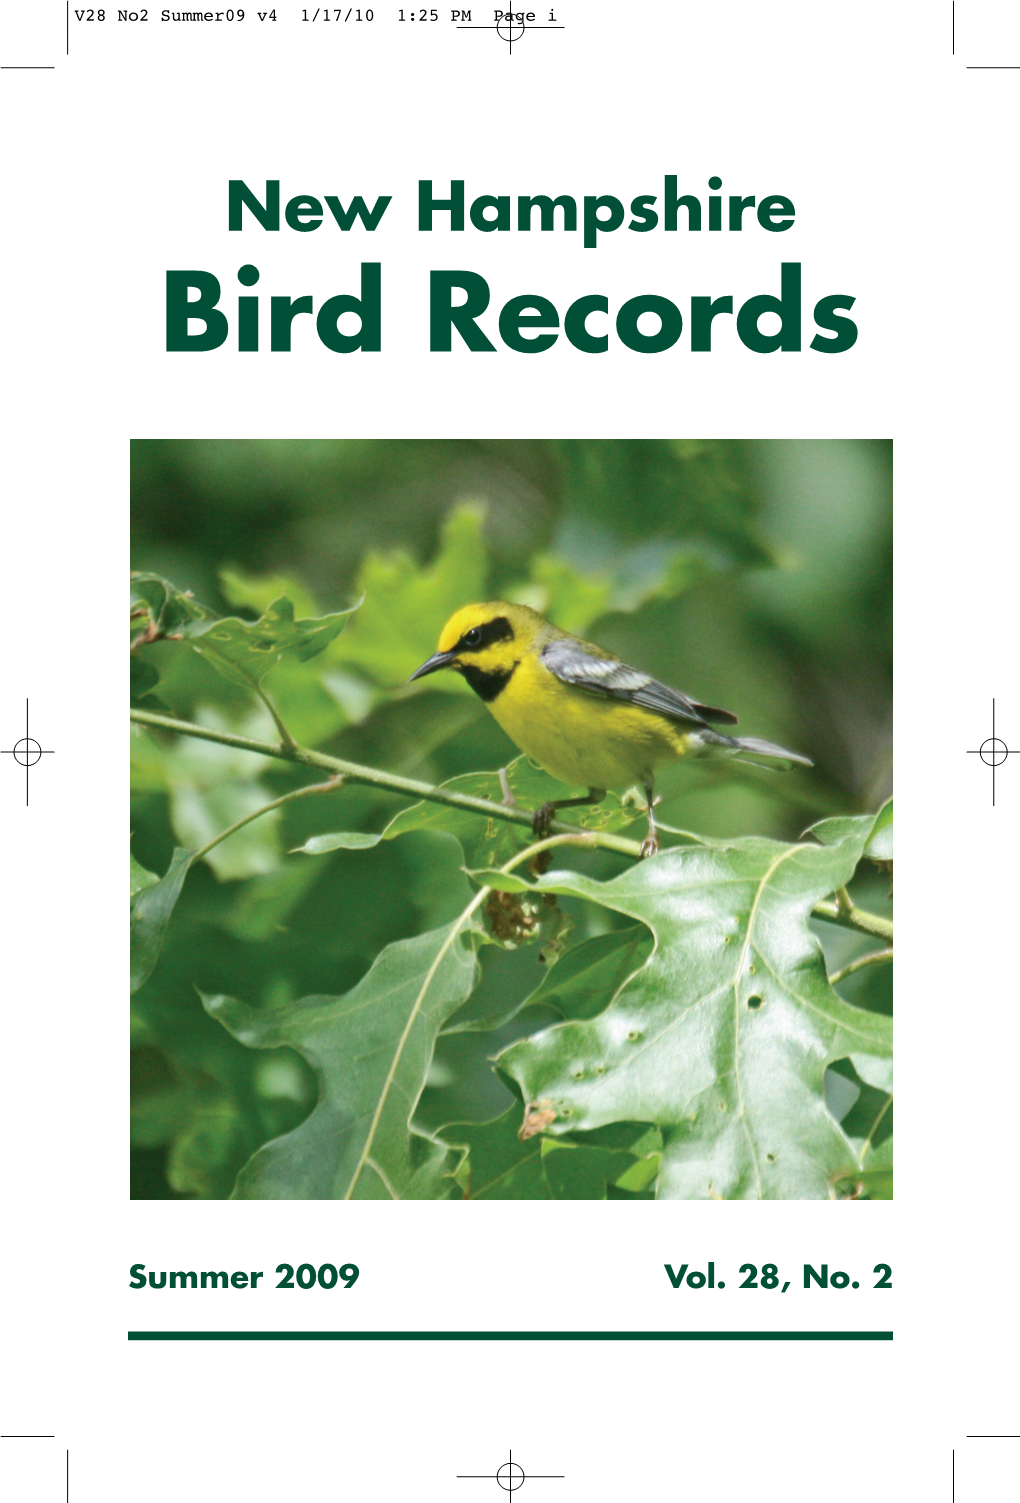 Winter 2007-08 Bird Records